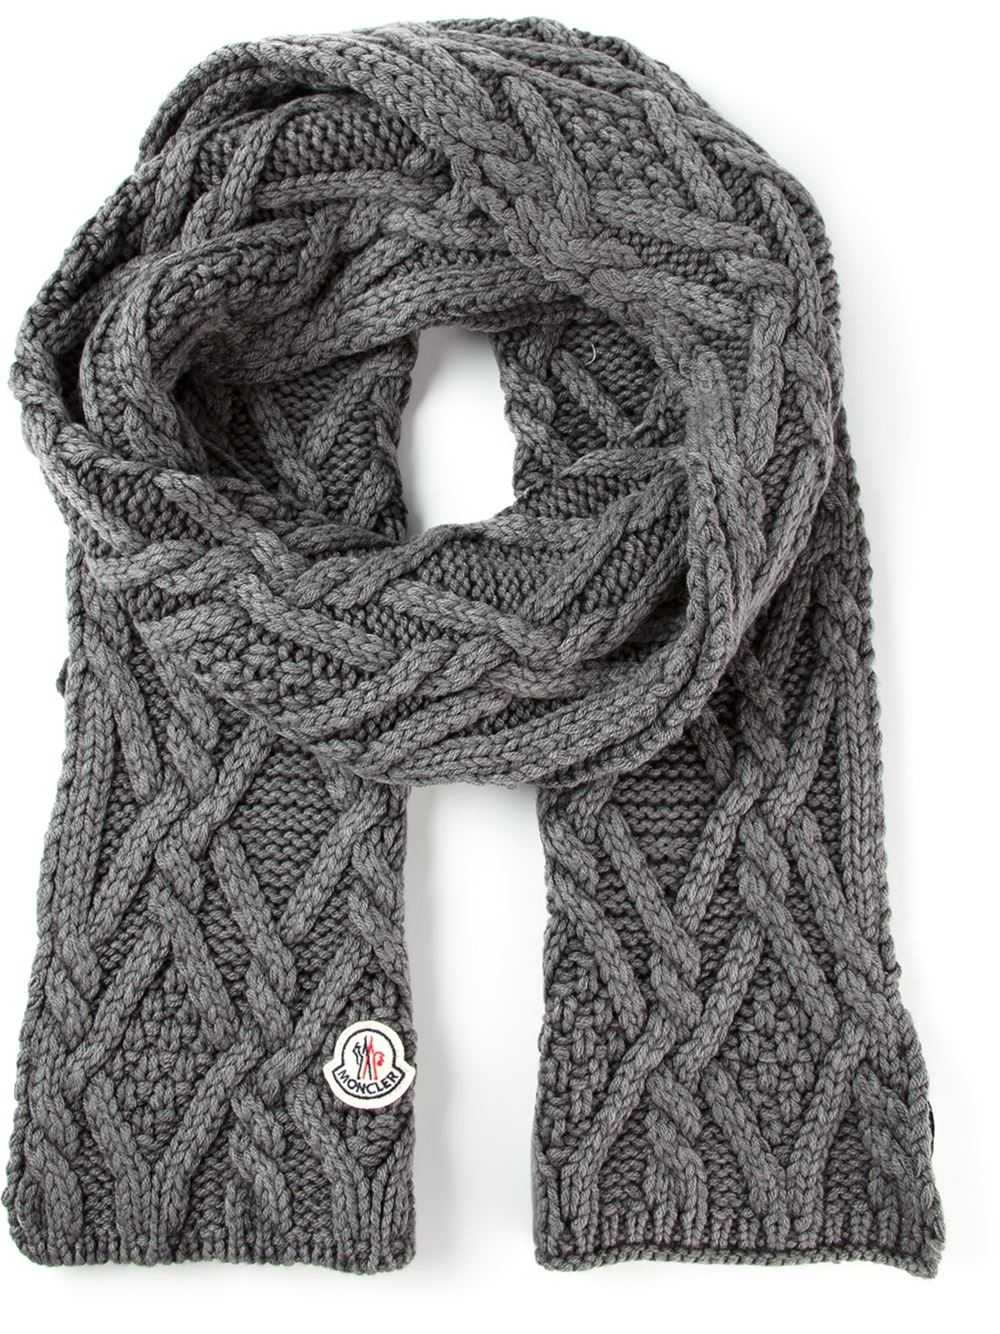 Lyst - Moncler Aran Knit Scarf in Gray for Men